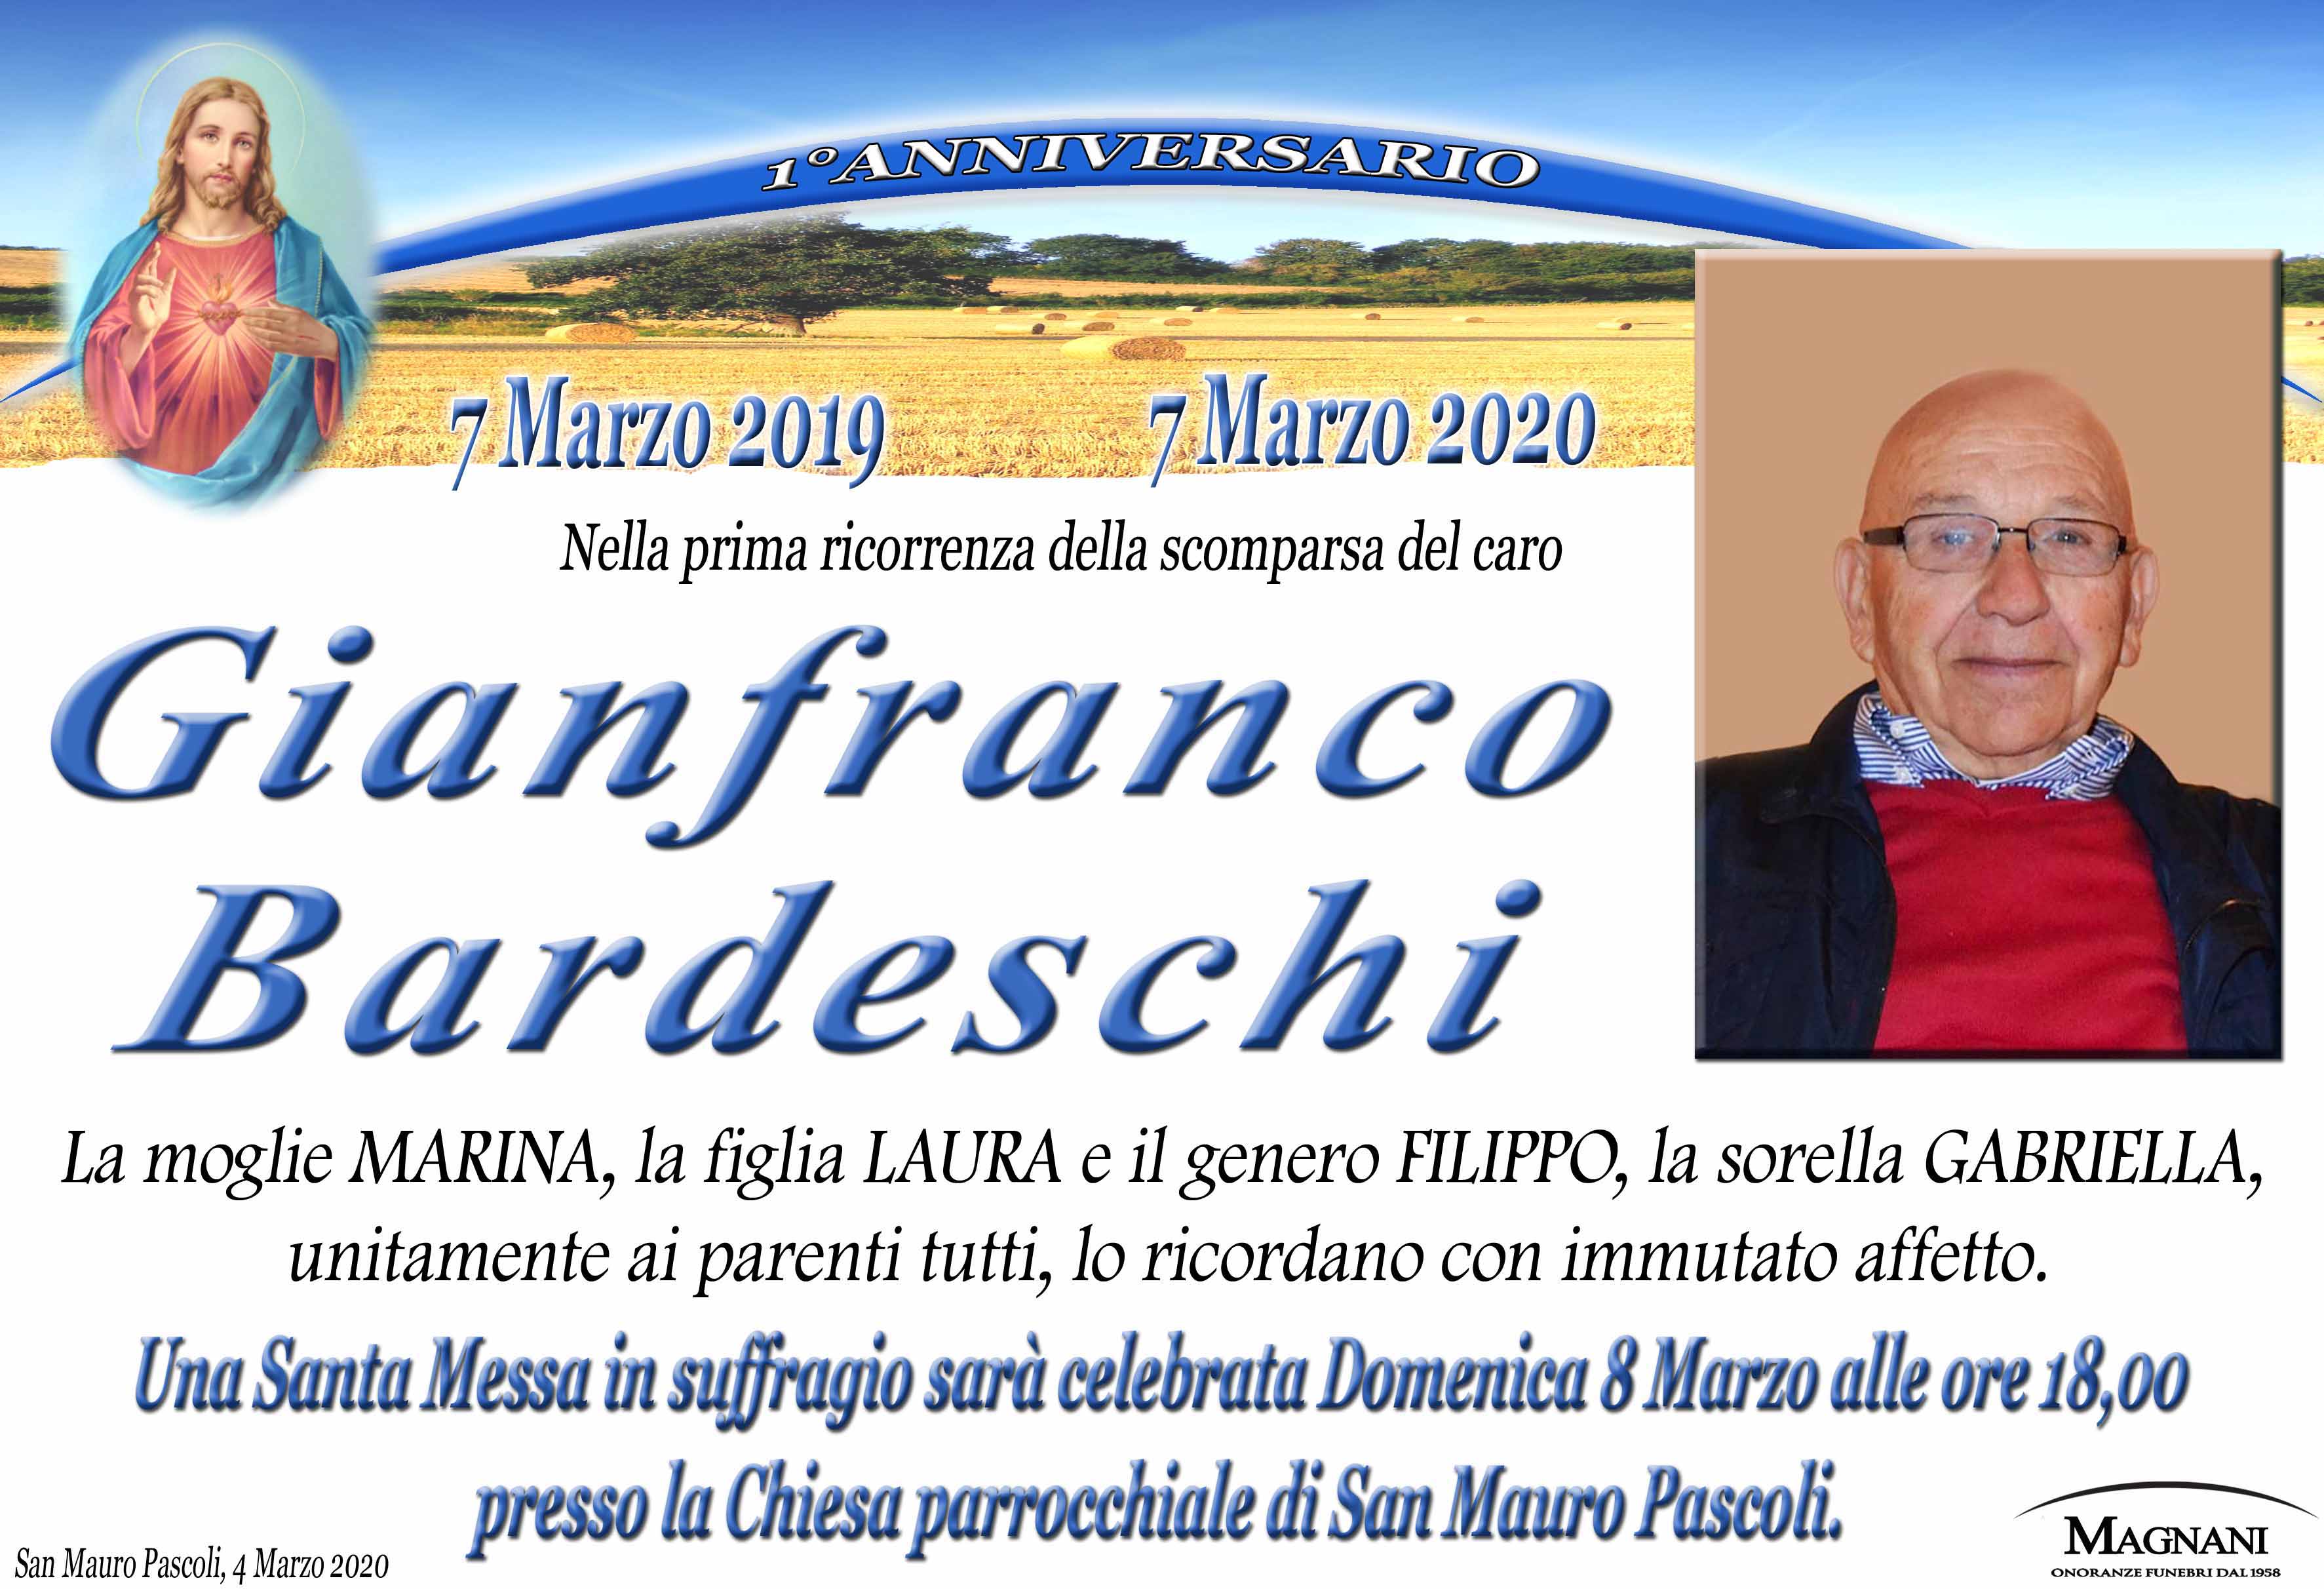 Gianfranco Bardeschi